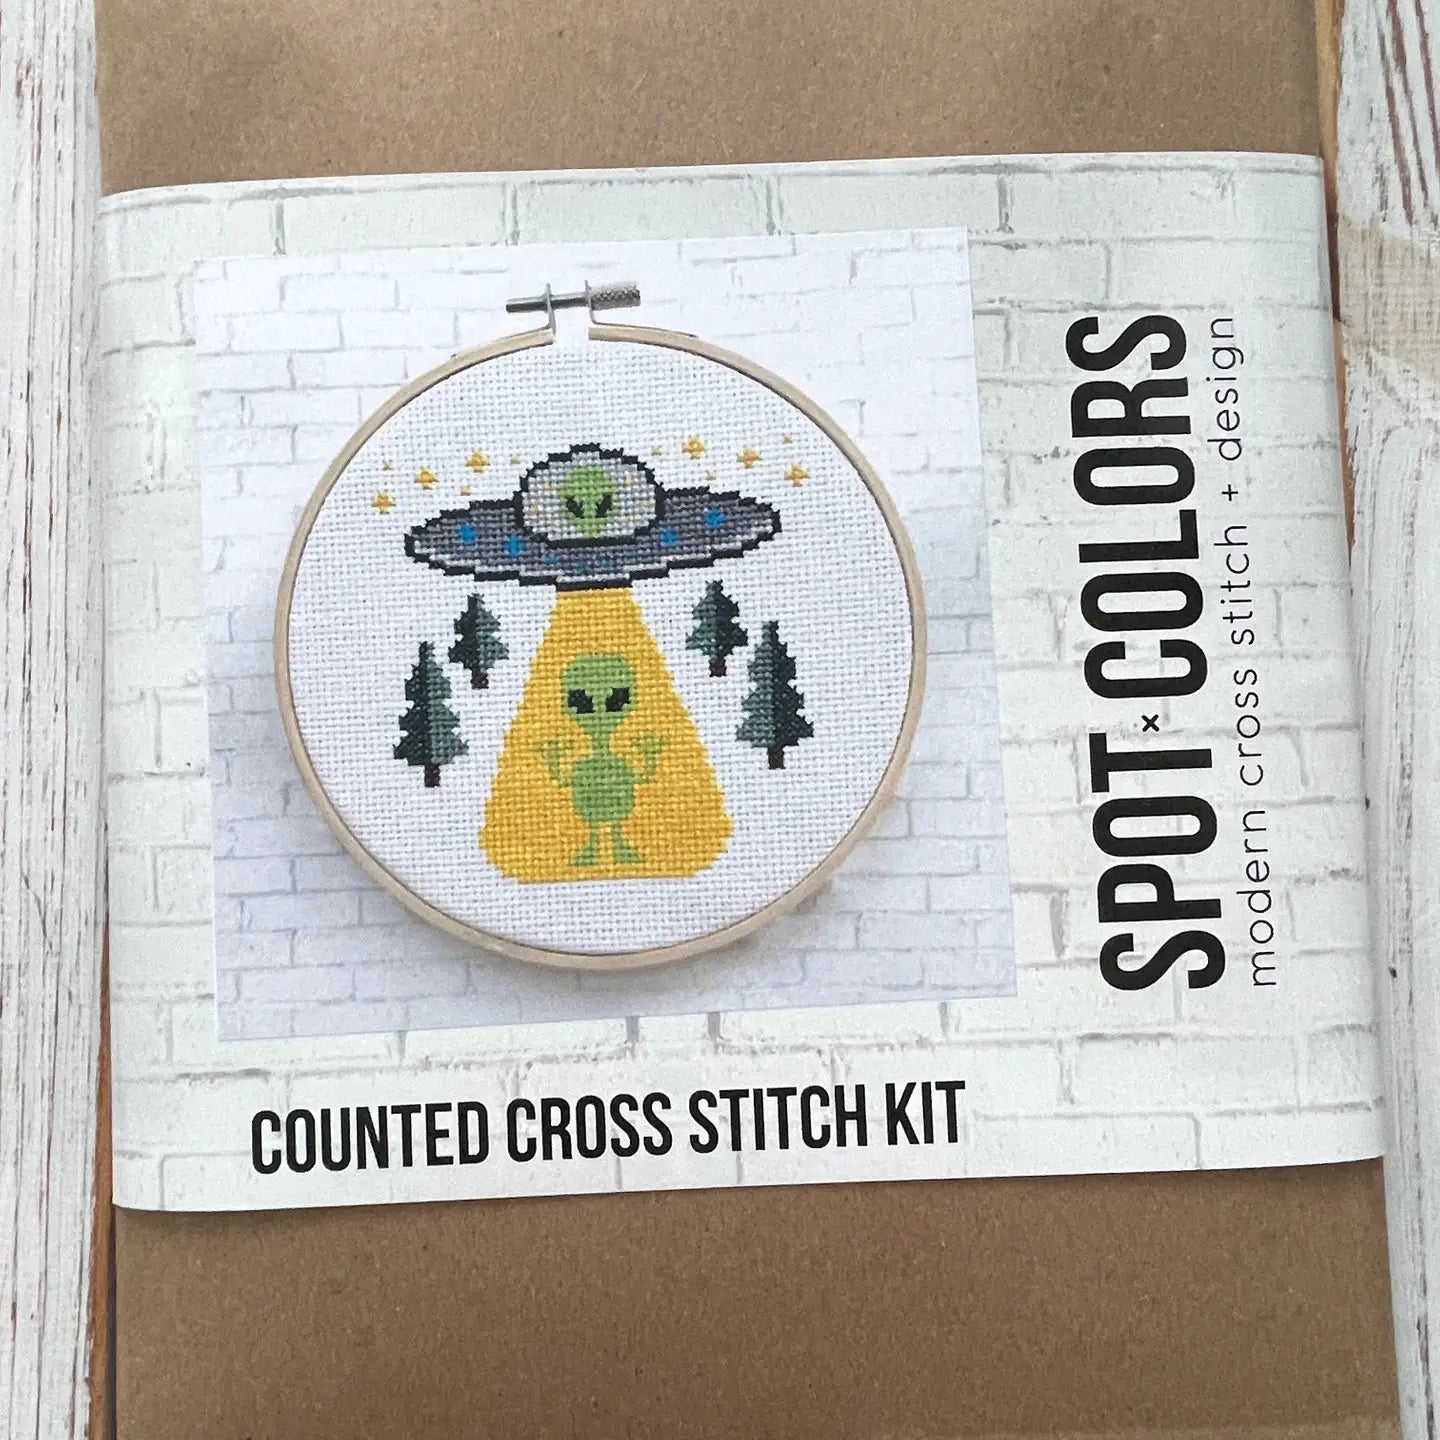 We Are Not Alone Alien Cross Stitch Kit